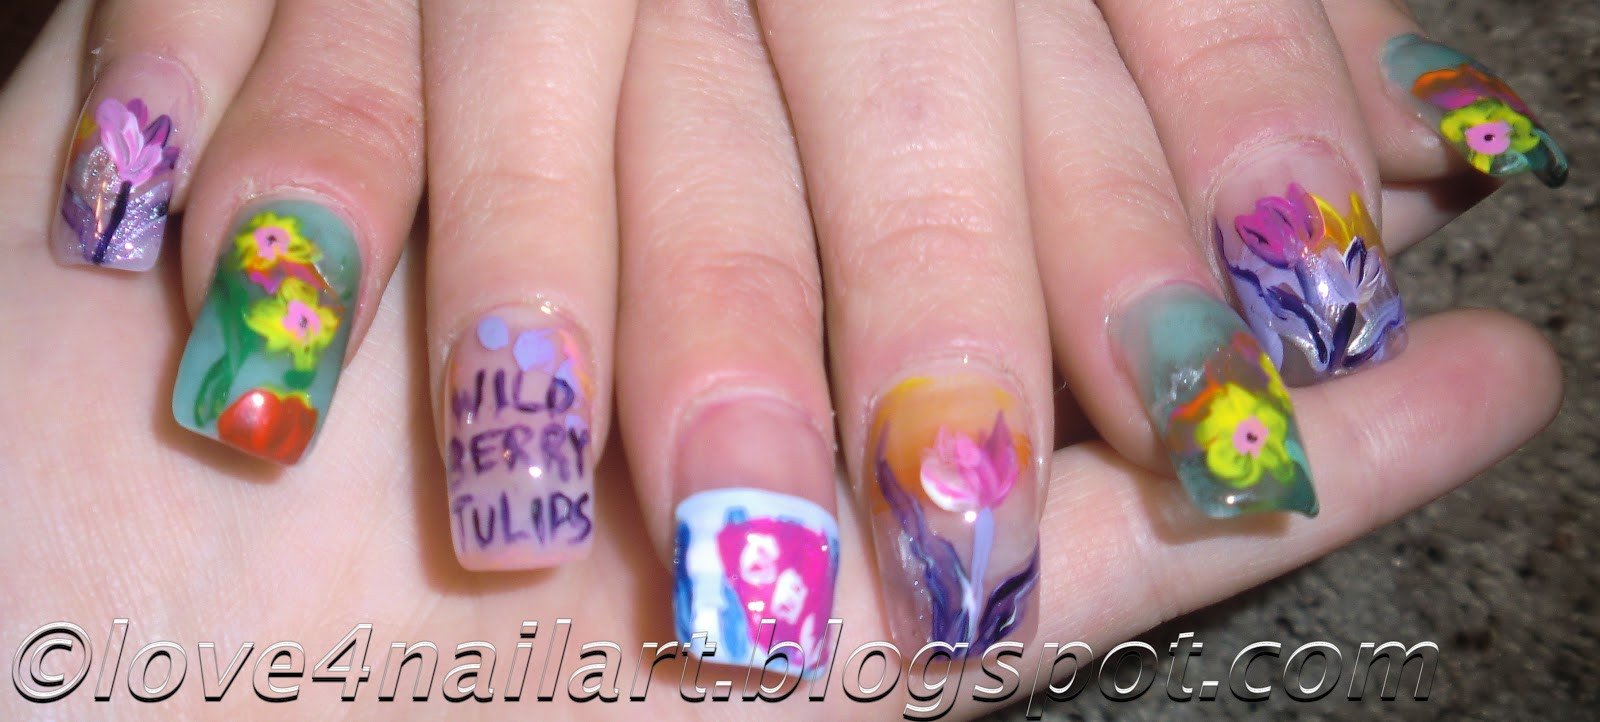 Hey Beautiful Nails
 Love4NailArt BBW Wild Berry Tulips & Wild Apple